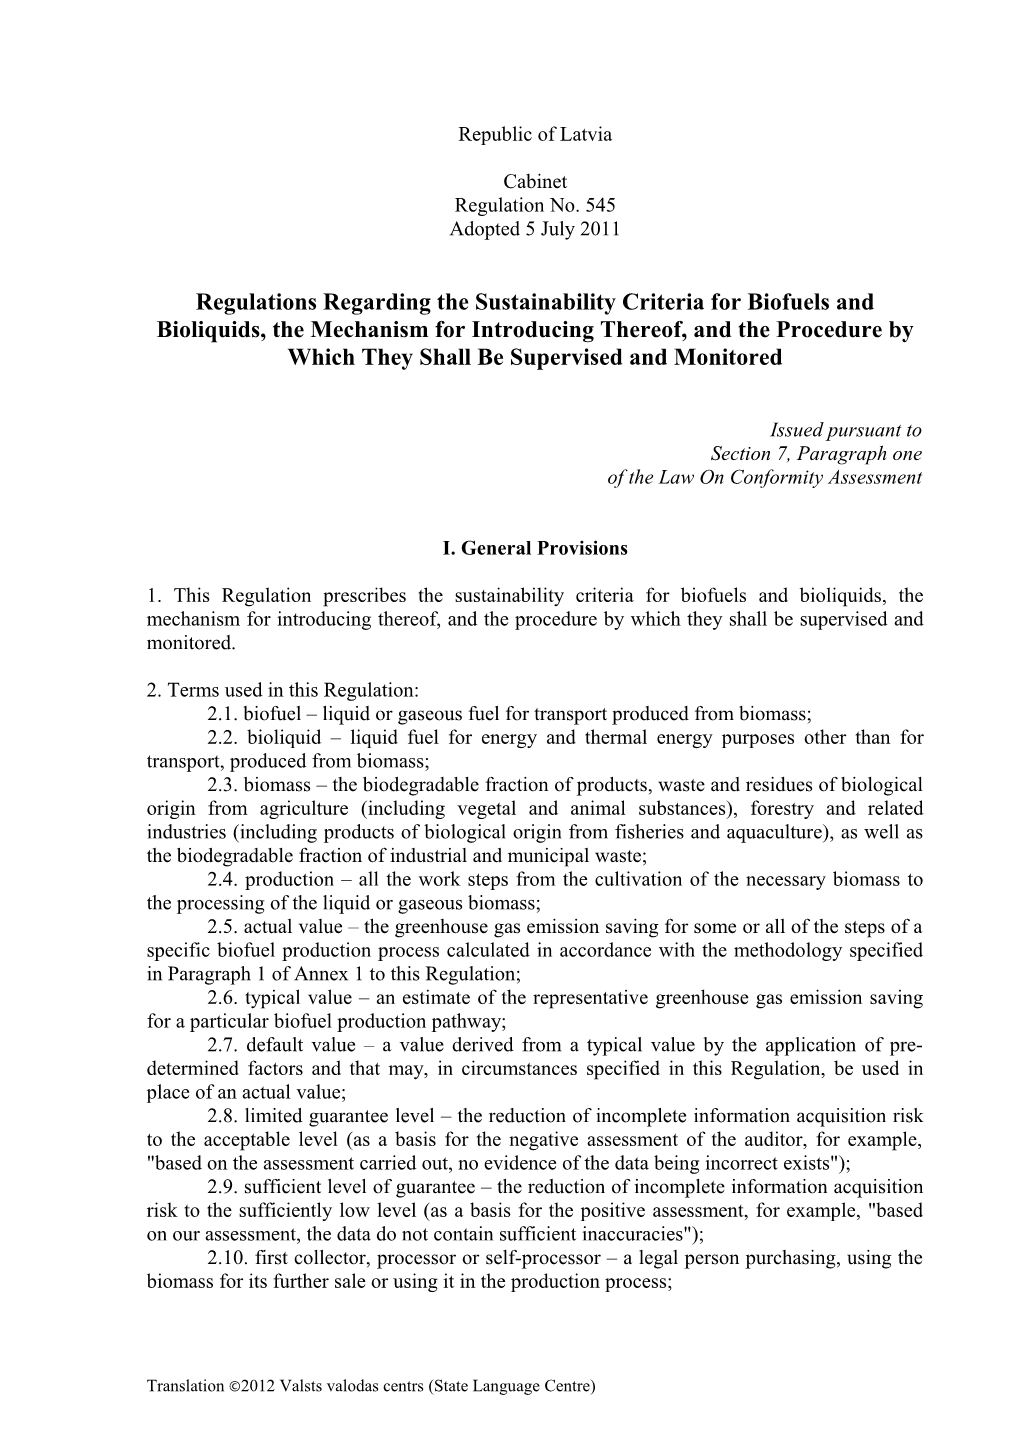 Regulations Regarding the Sustainability Criteria for Biofuels and Bioliquids, the Mechanism